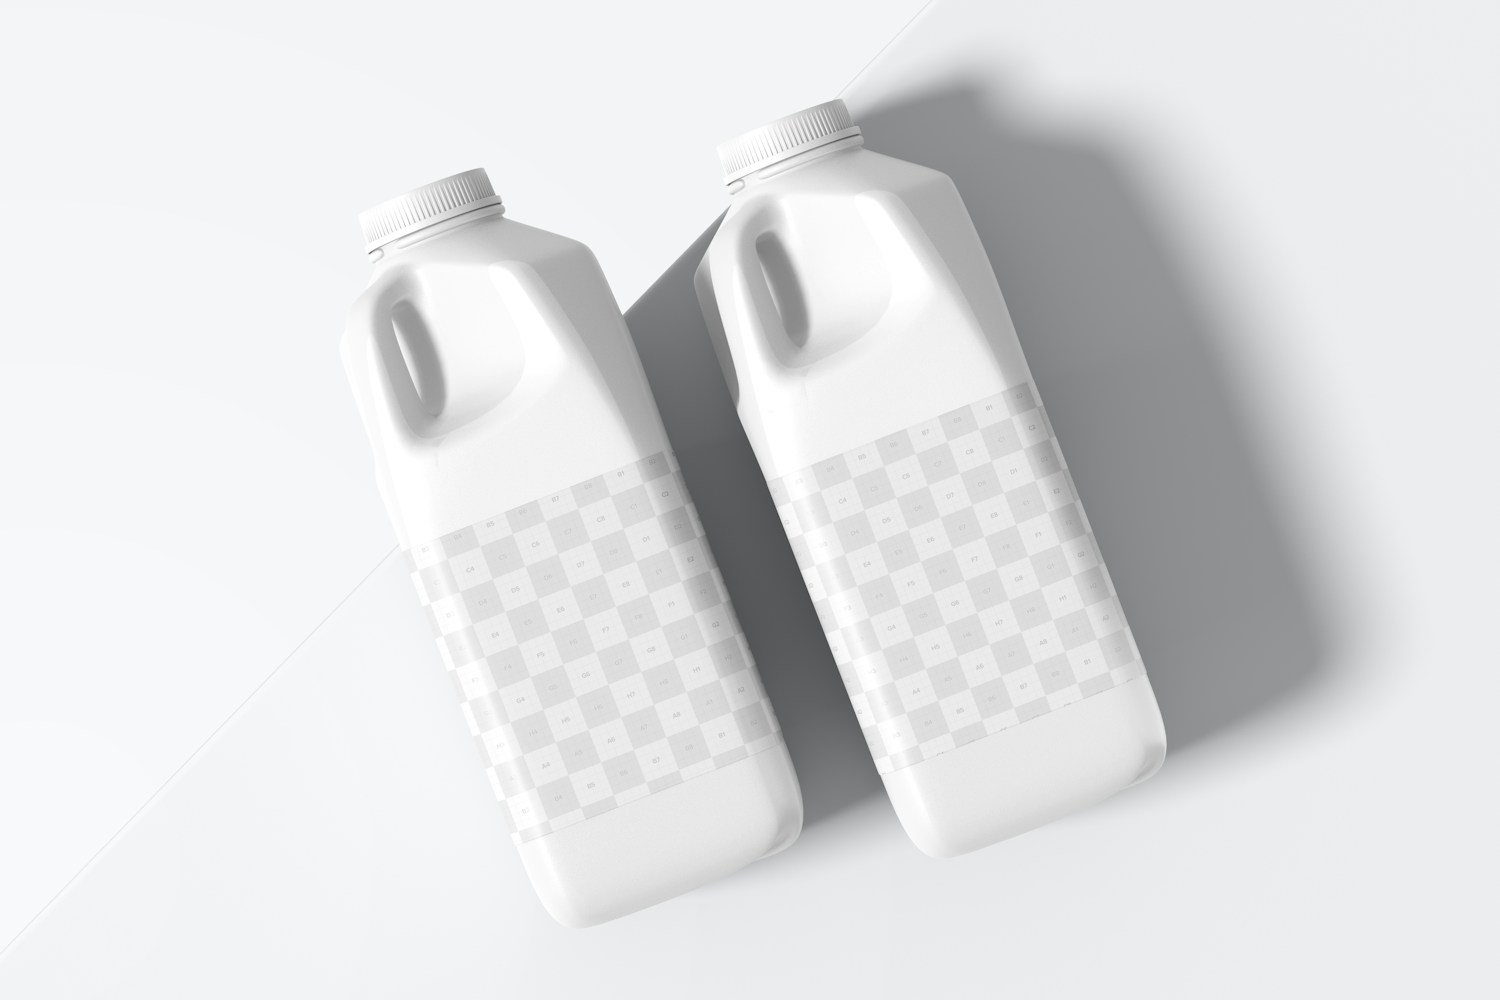 64 oz Milk Bottles Mockup, Top View